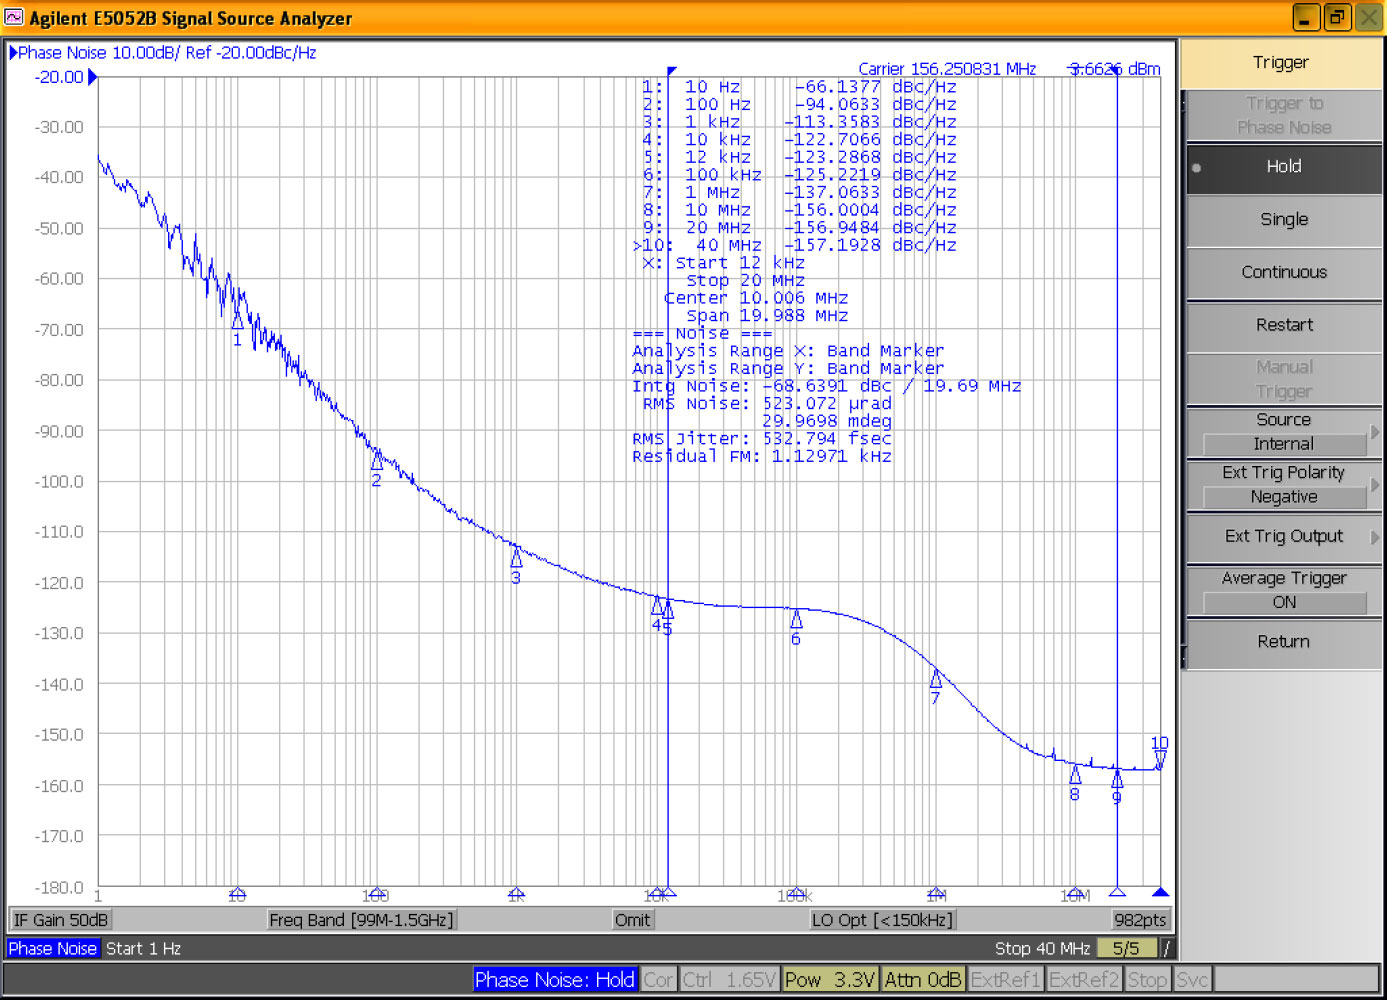 Phase-Noise-Kurve eines programmierbaren Oszillators mit differenziellem Ausgang bei 125.000 MHz; RMS-Jitter ~ 532fs